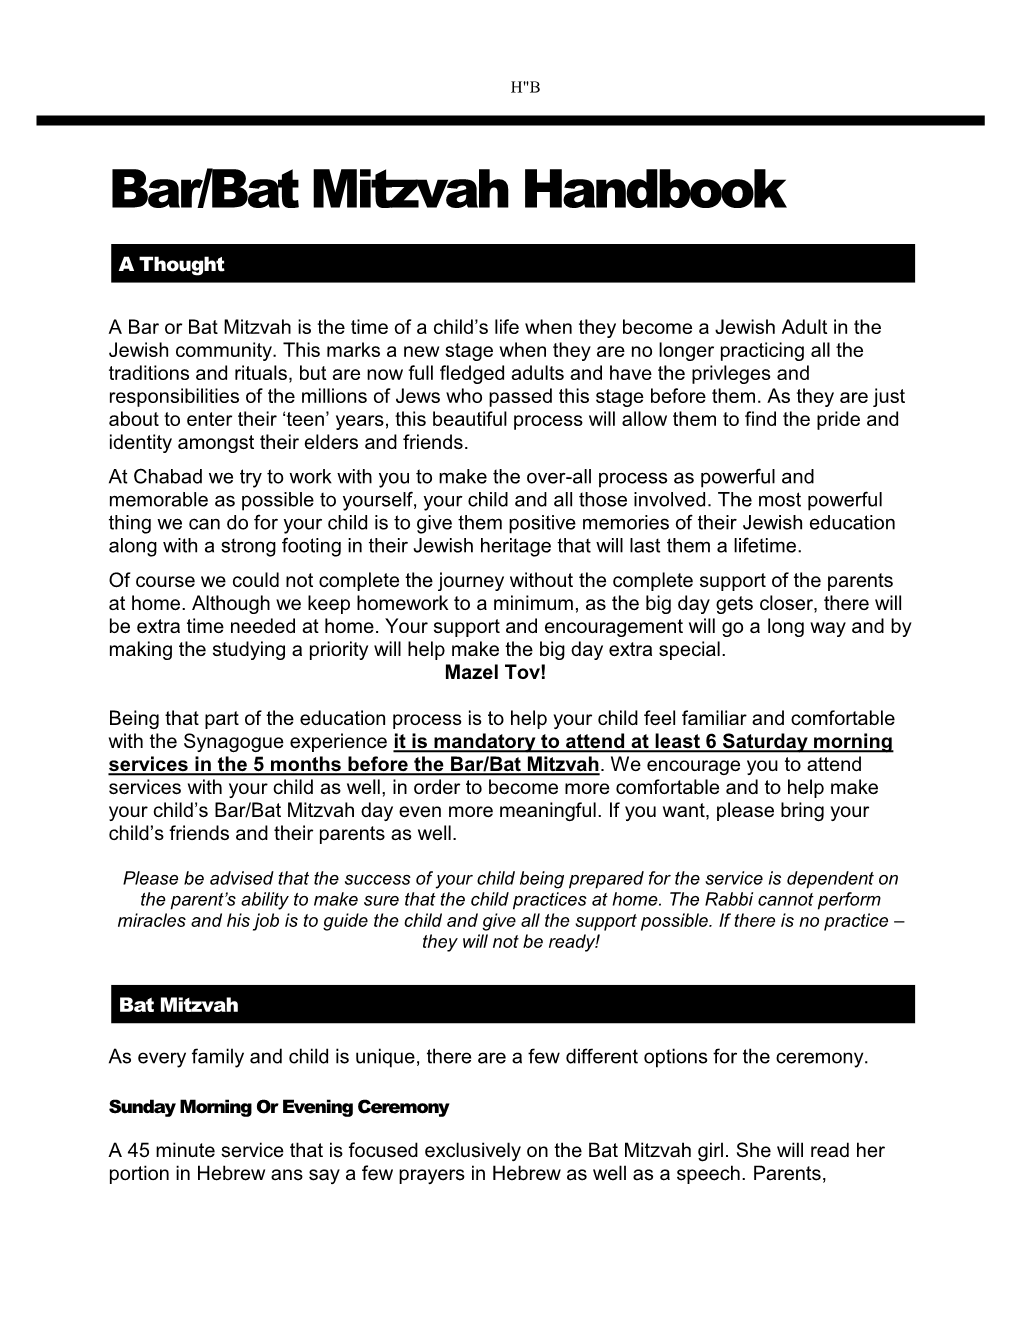 Bar/Bat Mitzvah Handbook